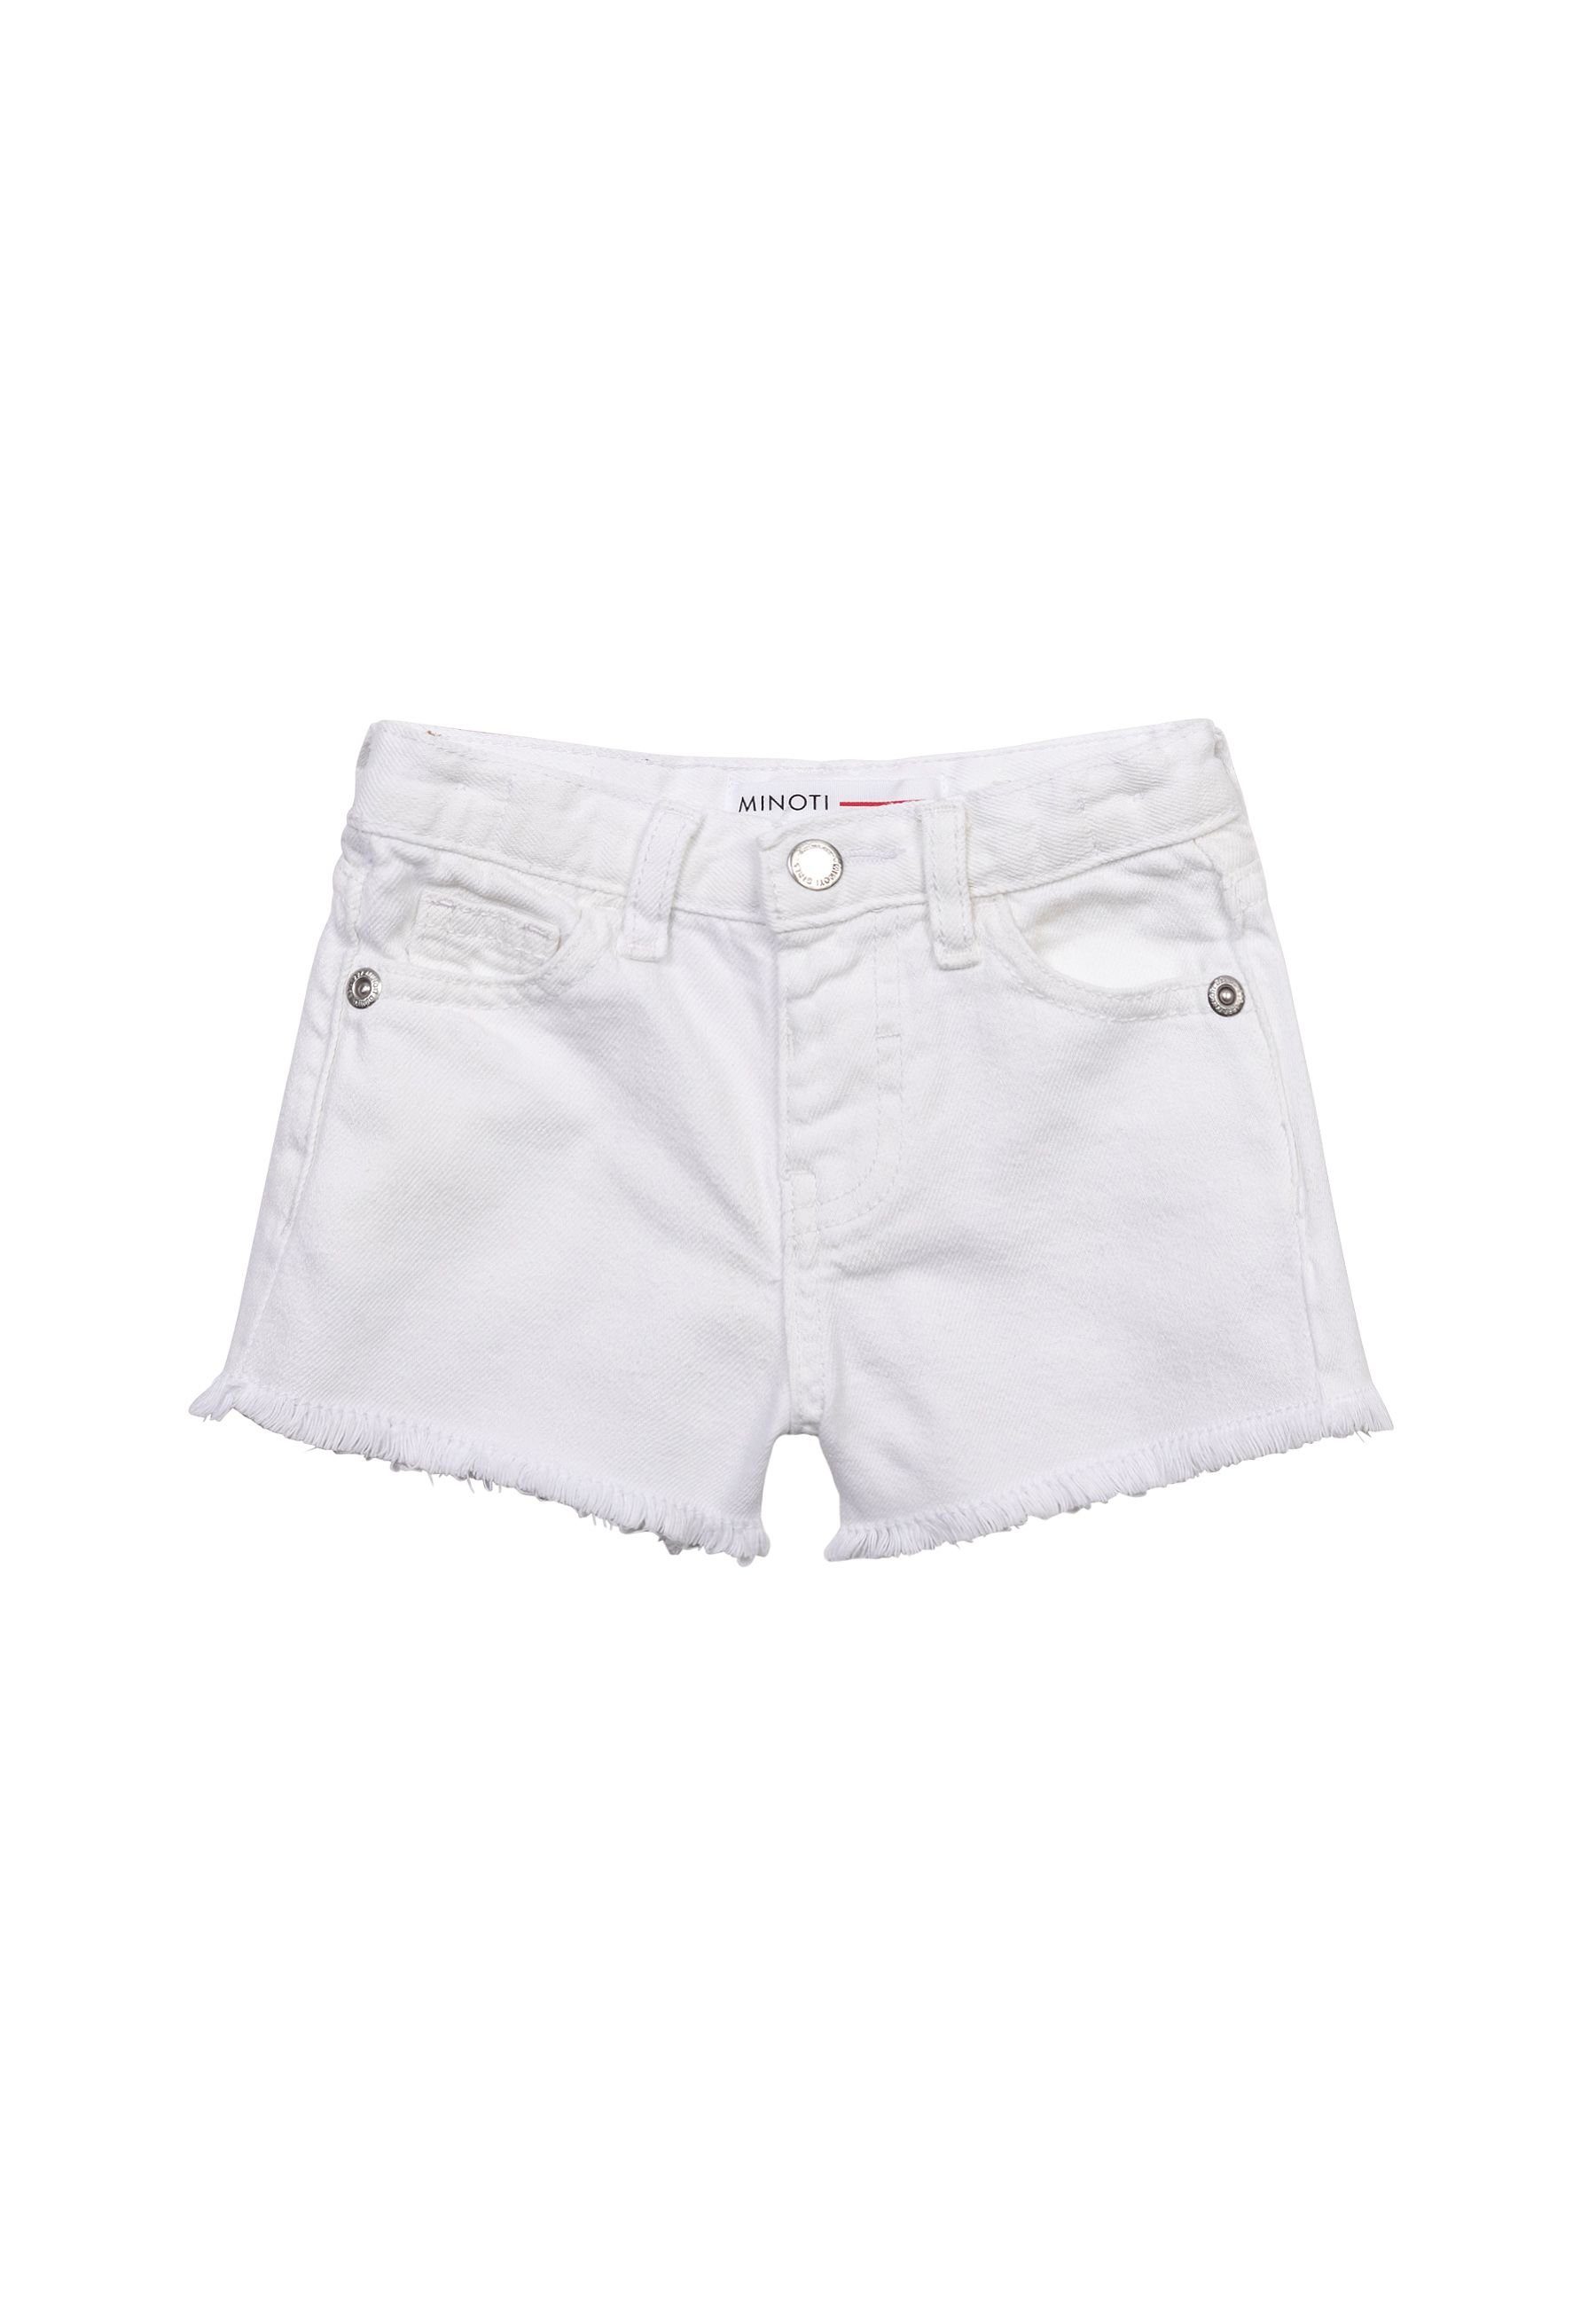 MINOTI Jeansshorts Kurze Jeans Shorts (1y-14y) Denim-Weiß